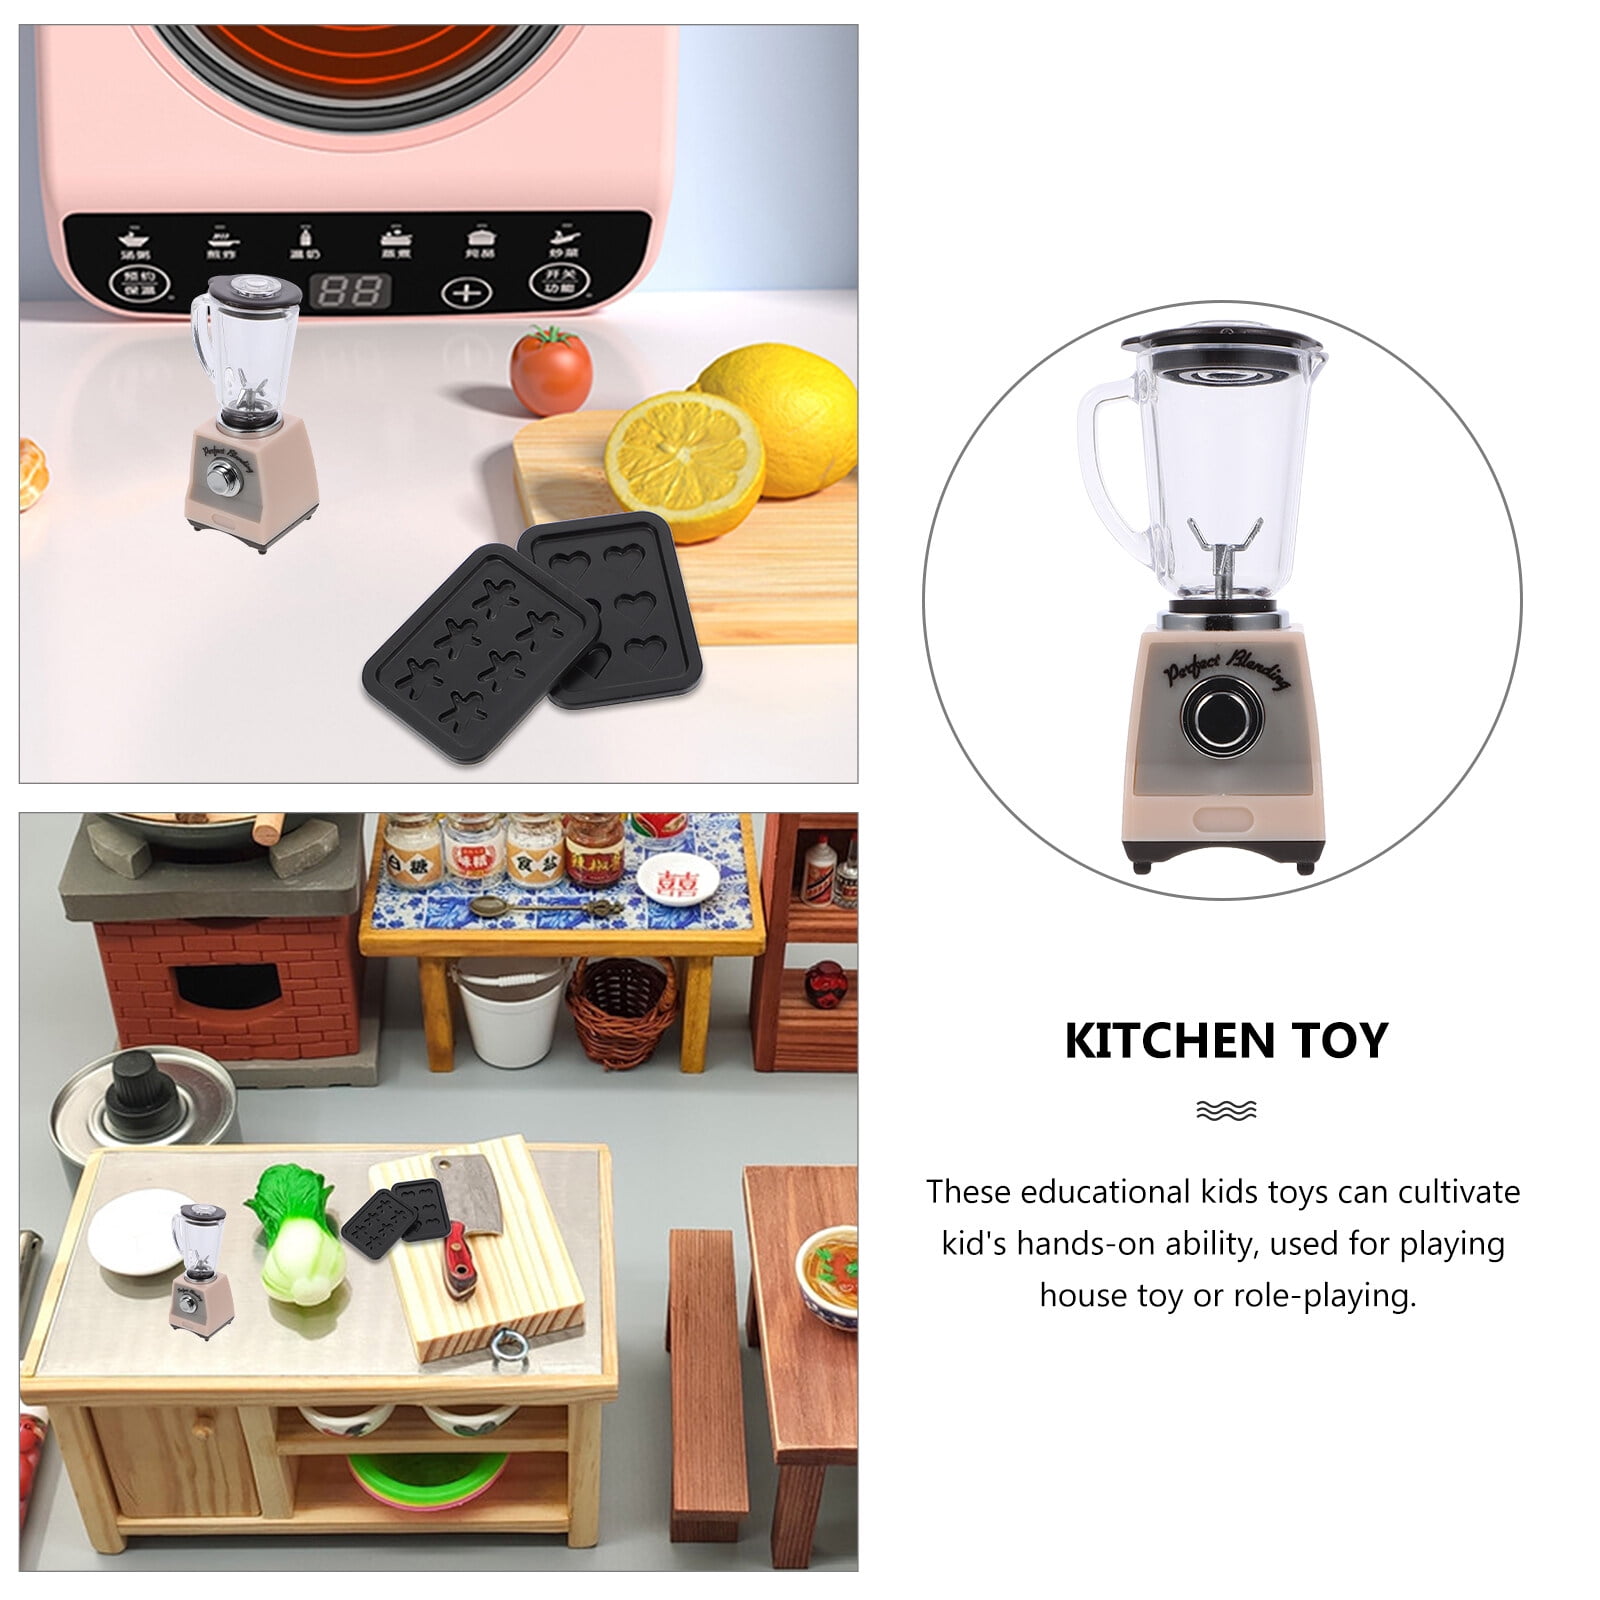 BRIGPICIOUS Blender Toy for Kids,Kitchen Accessories Pretend Play  Appliances Smoothie Maker Blender Toy,Toy Food for Kids Blender and Mixer  Kitchen